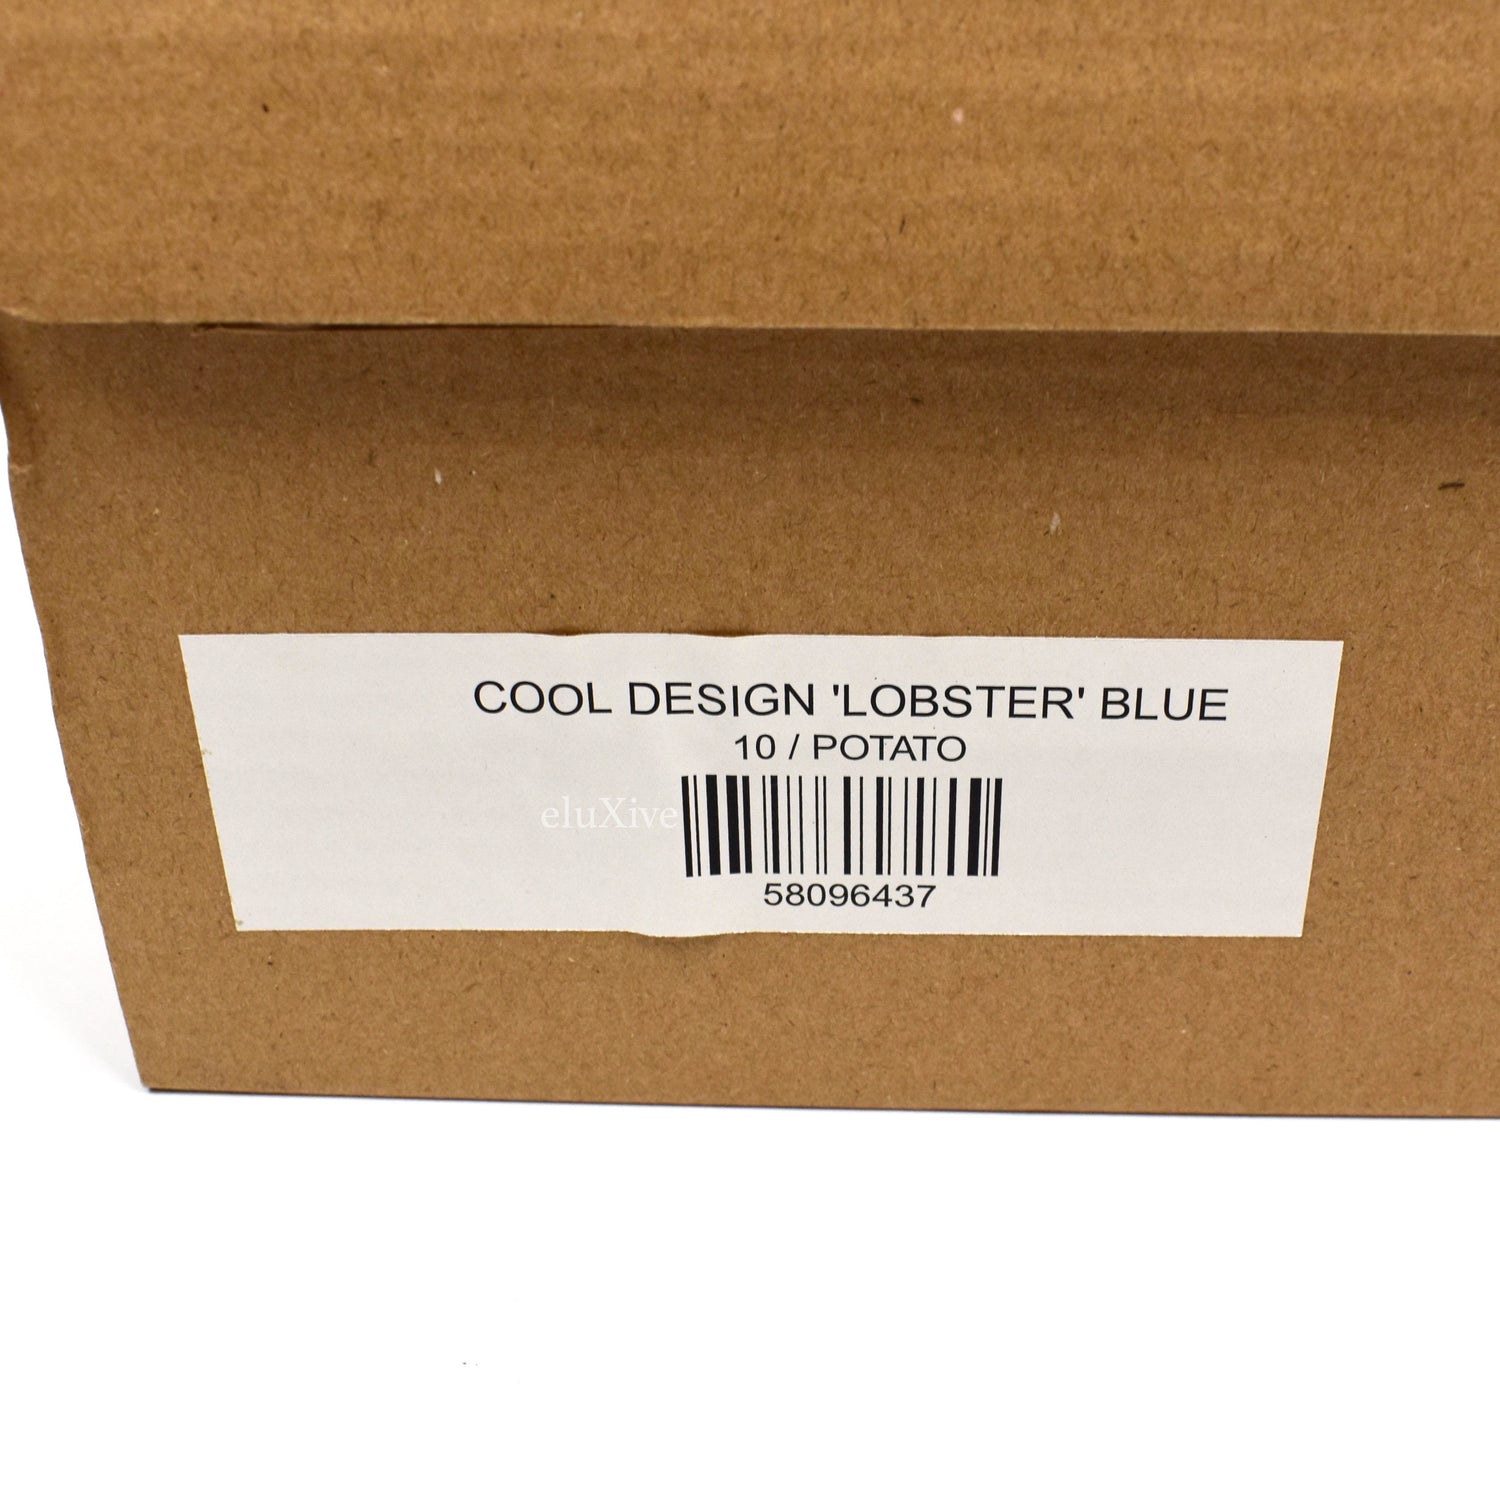 IMRAN POTATO LOBSTER Shoe Blue LV Kanye West Yeezy Foam Runner Size 10  $150.00 - PicClick